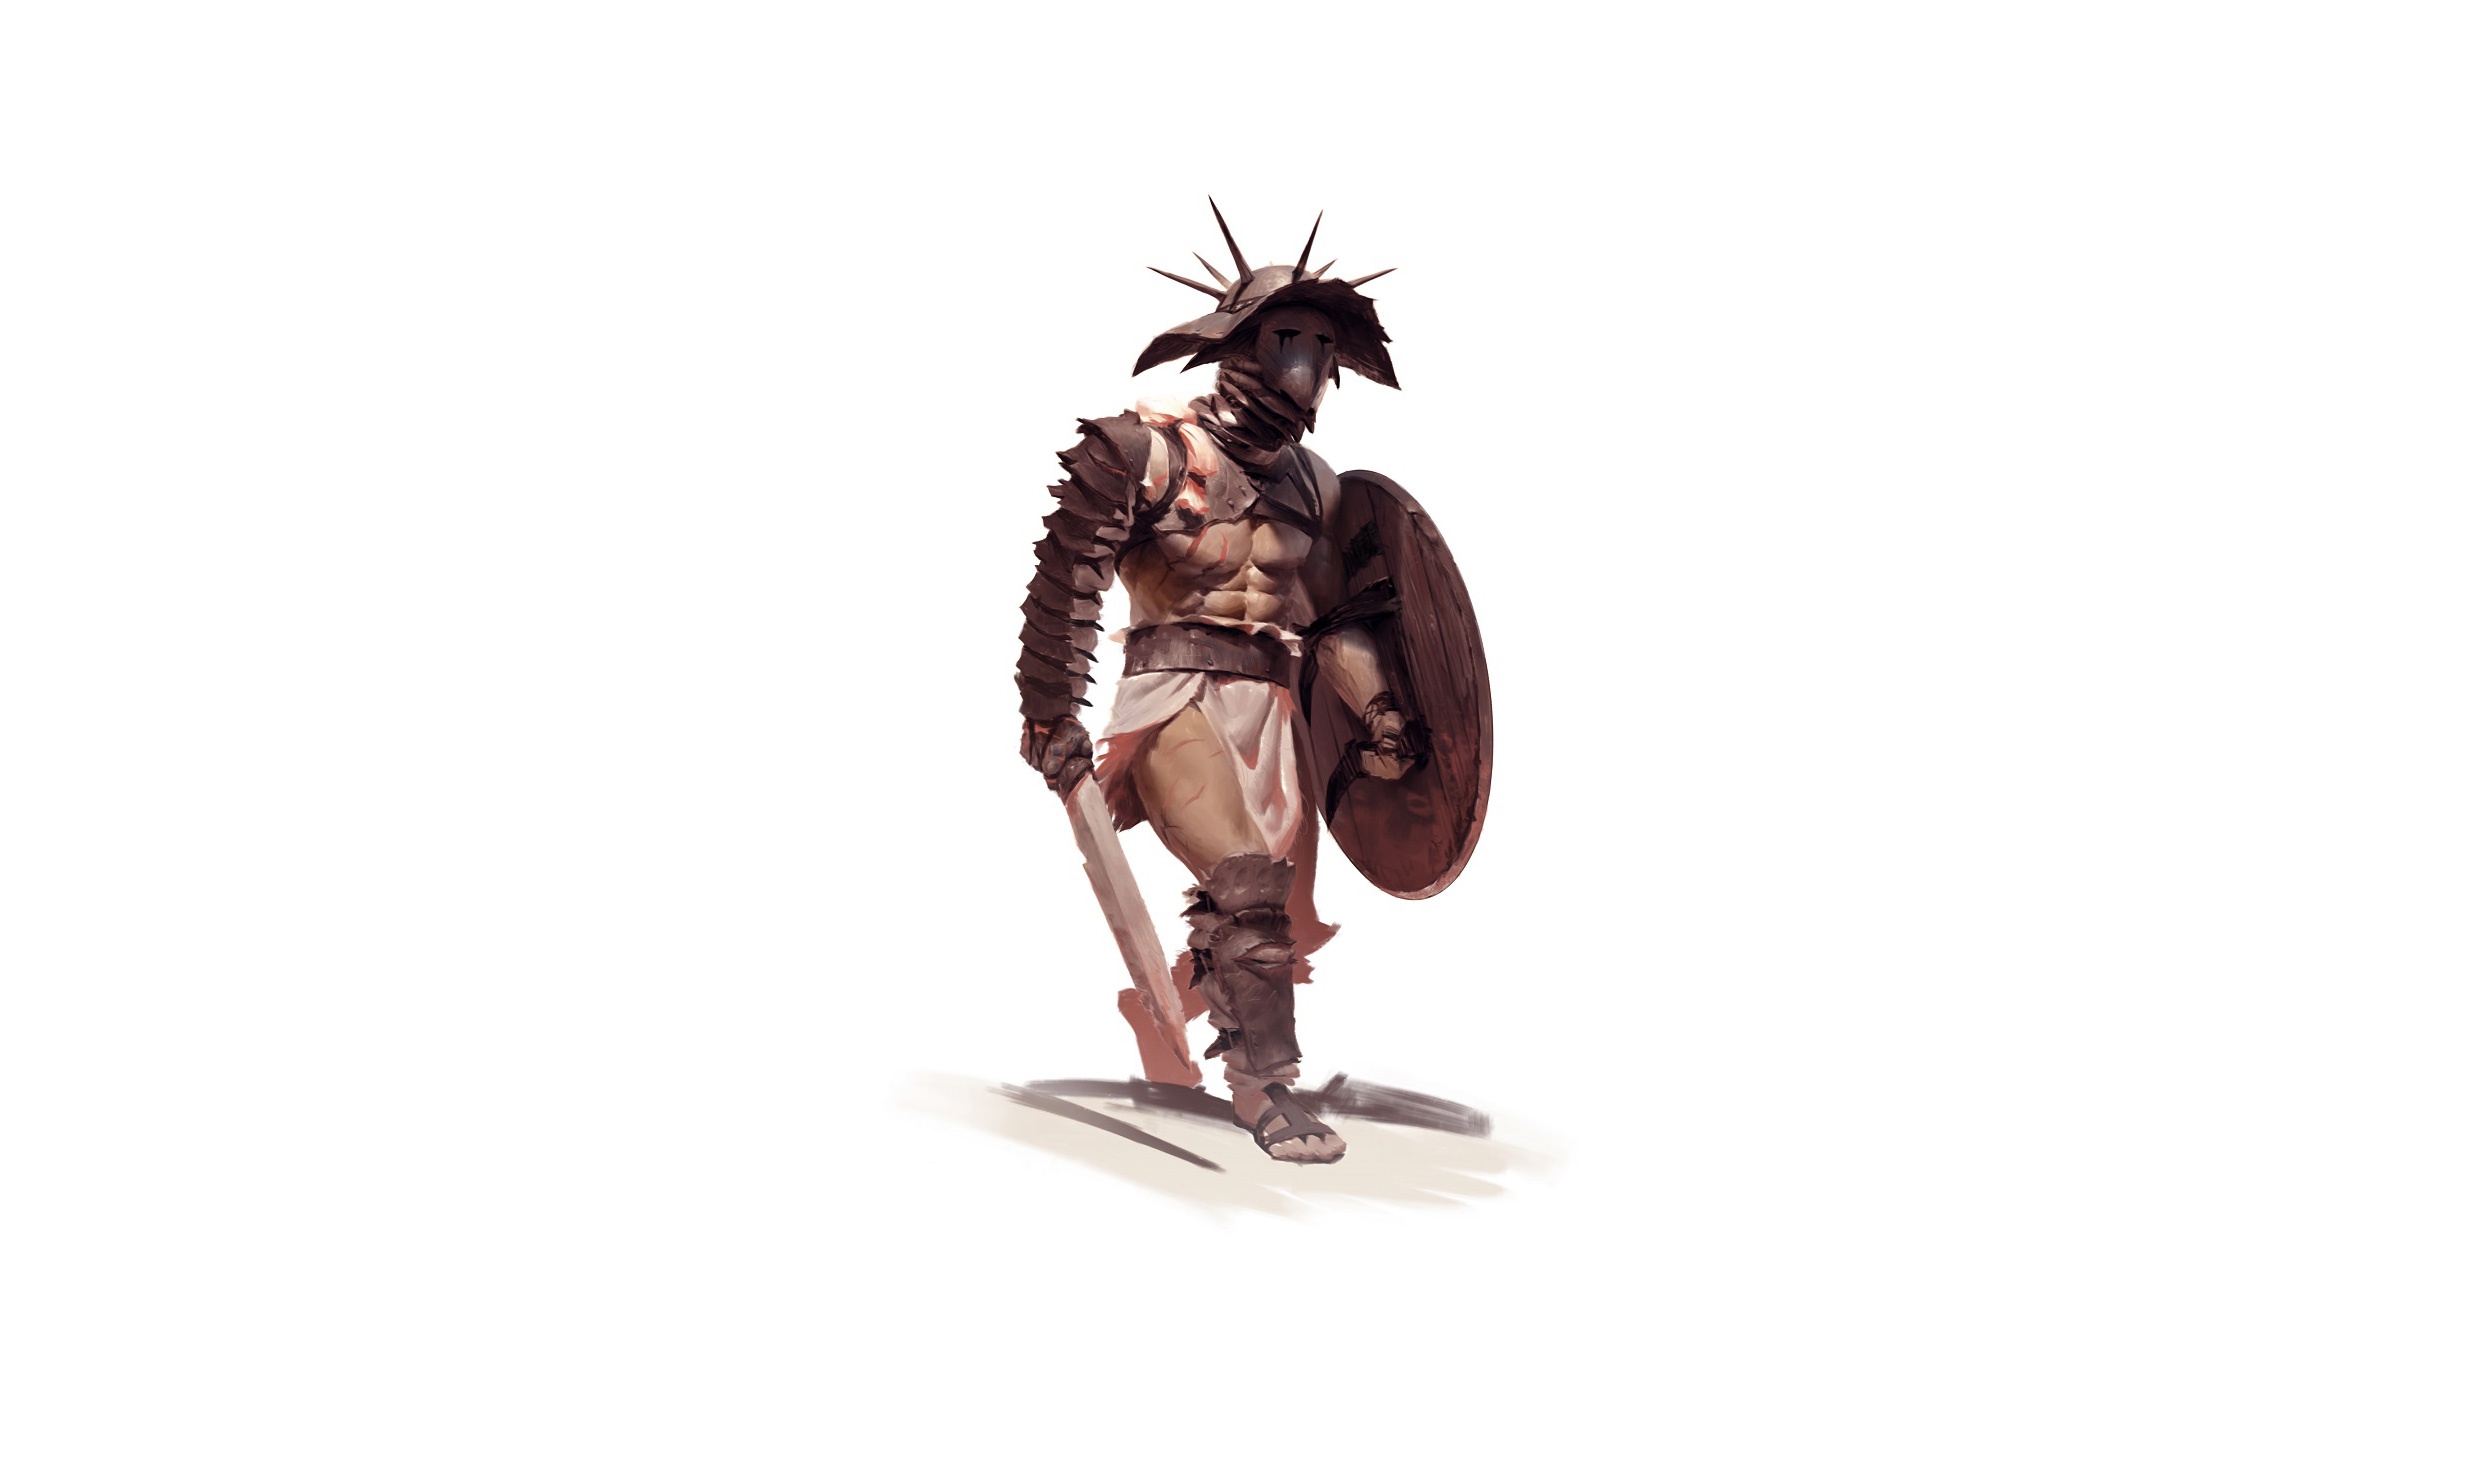 Gladiator Sword Warrior 2492x1480